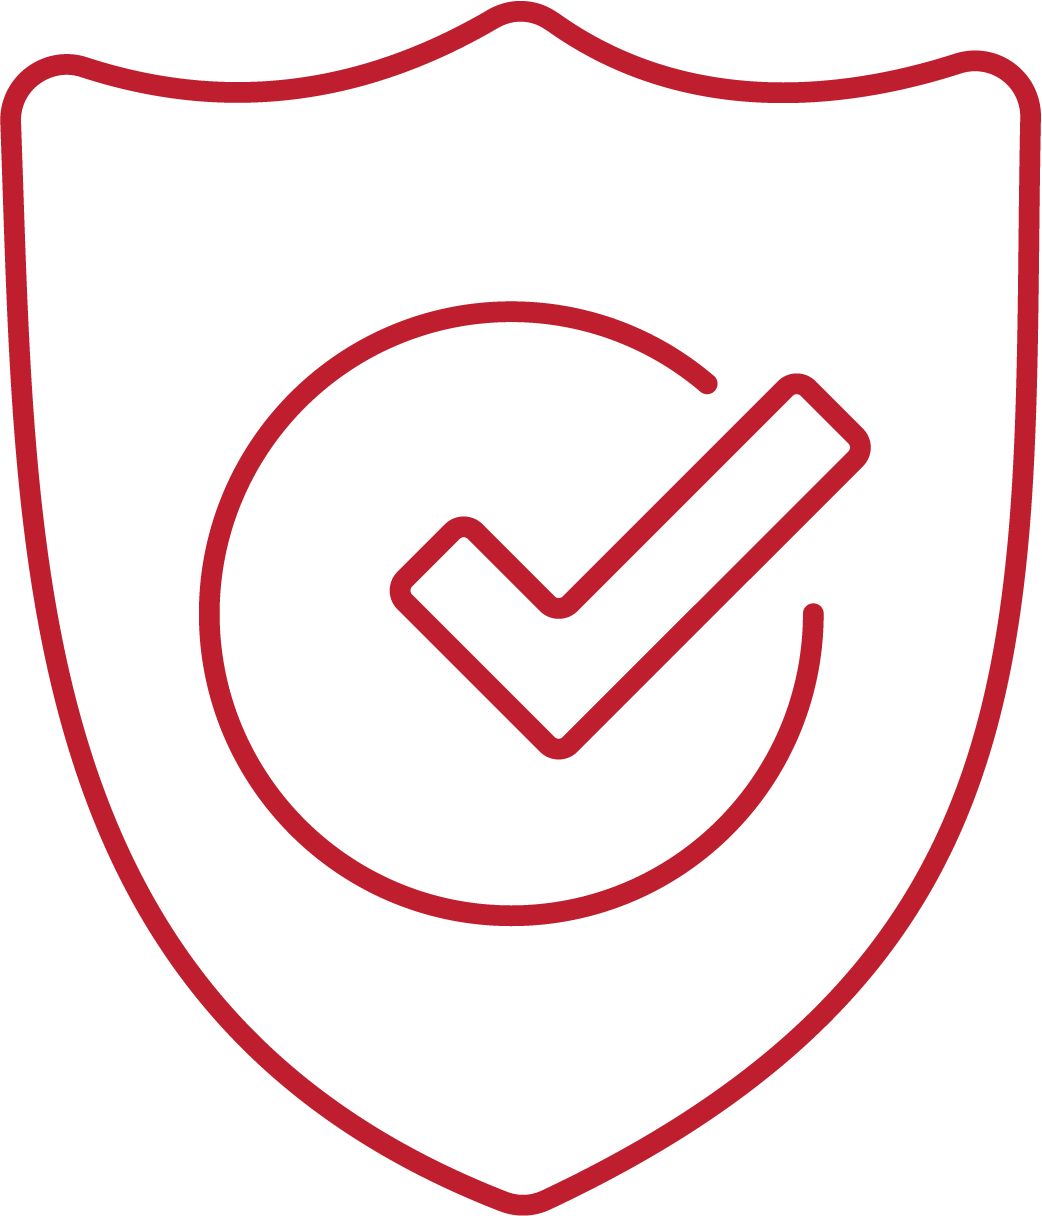 shield with check mark icon